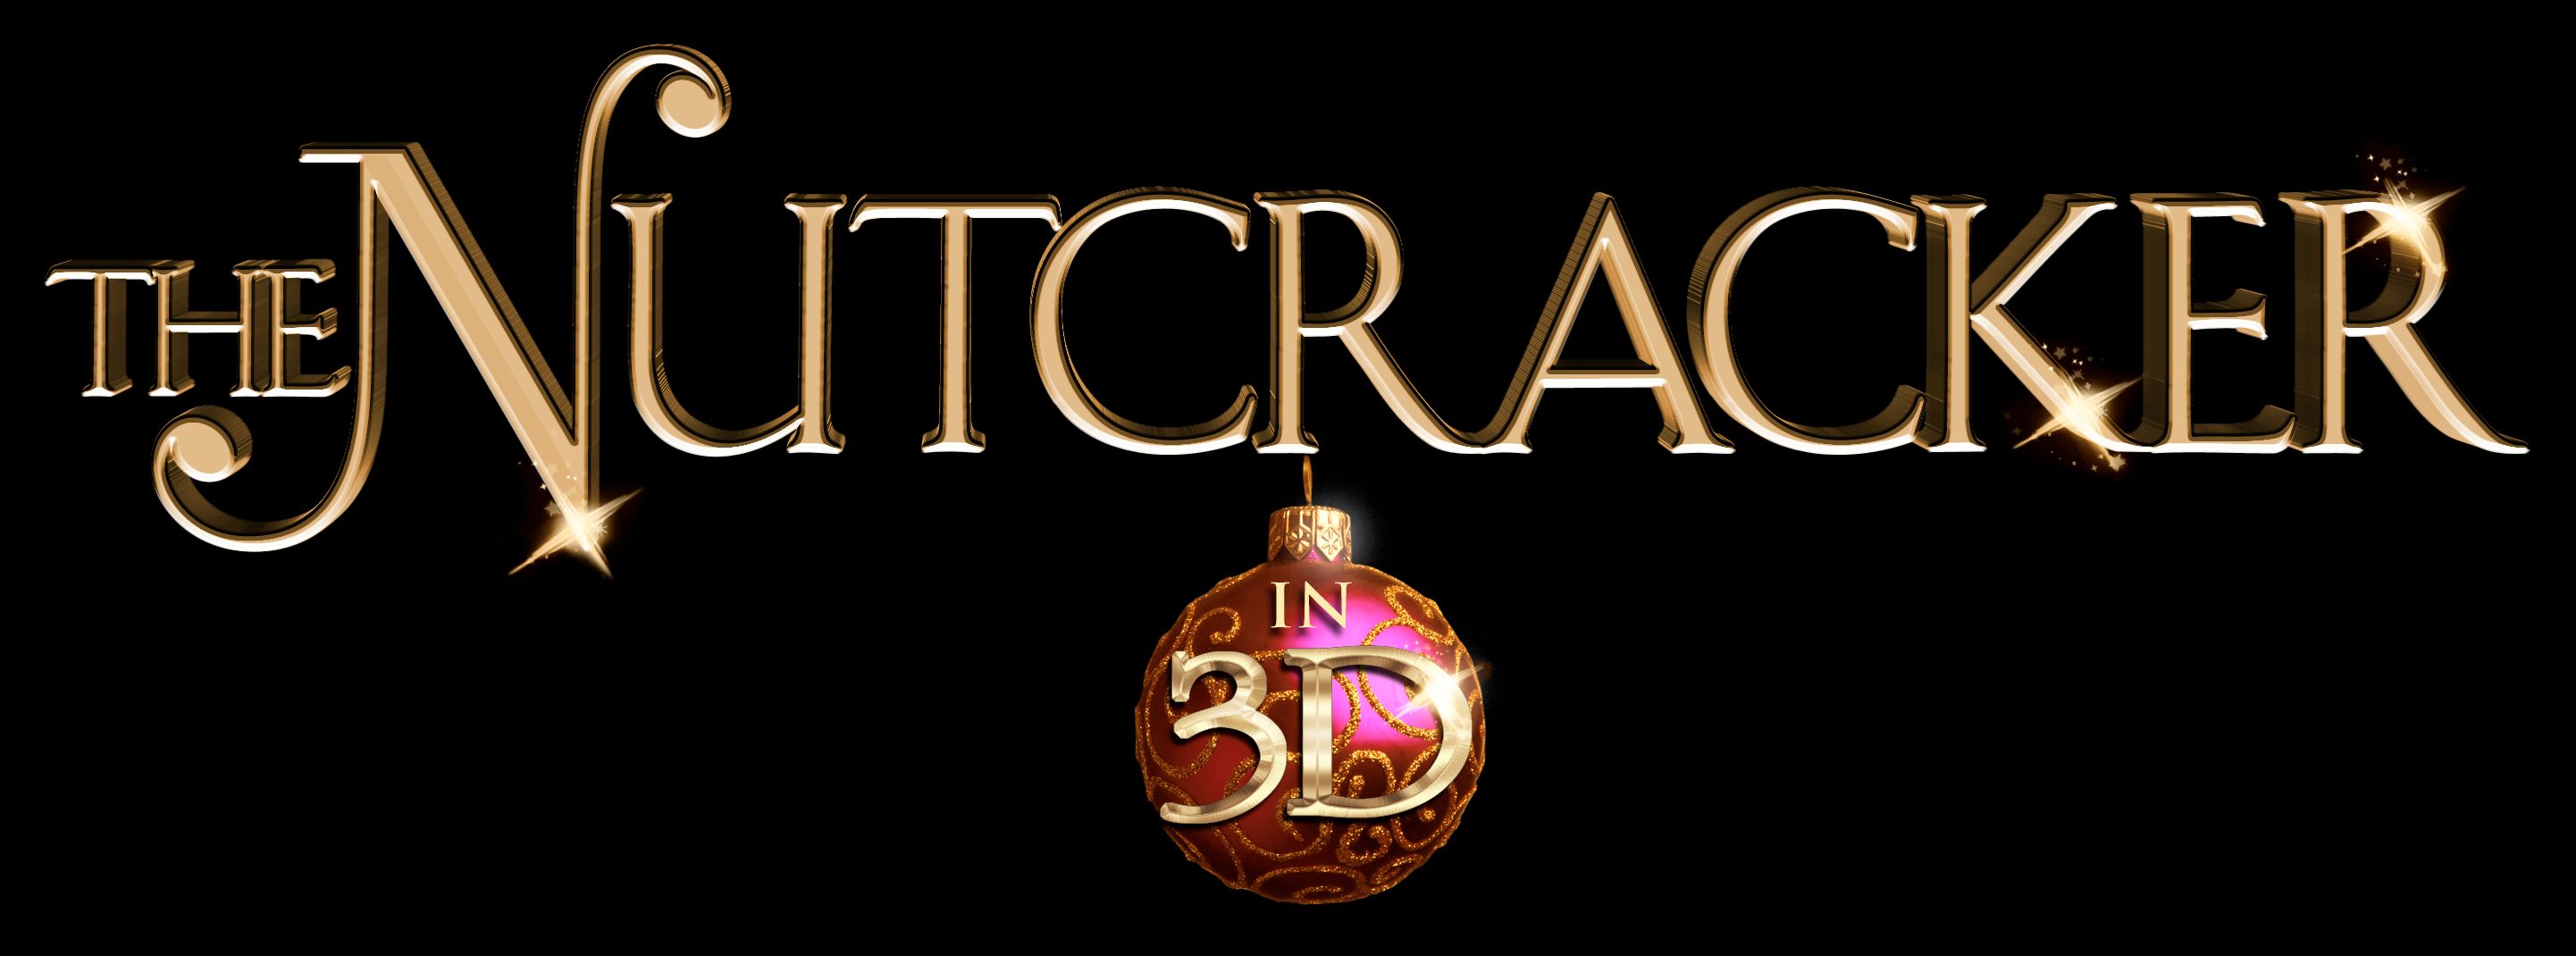 the_nutcracker_3d_title_logo